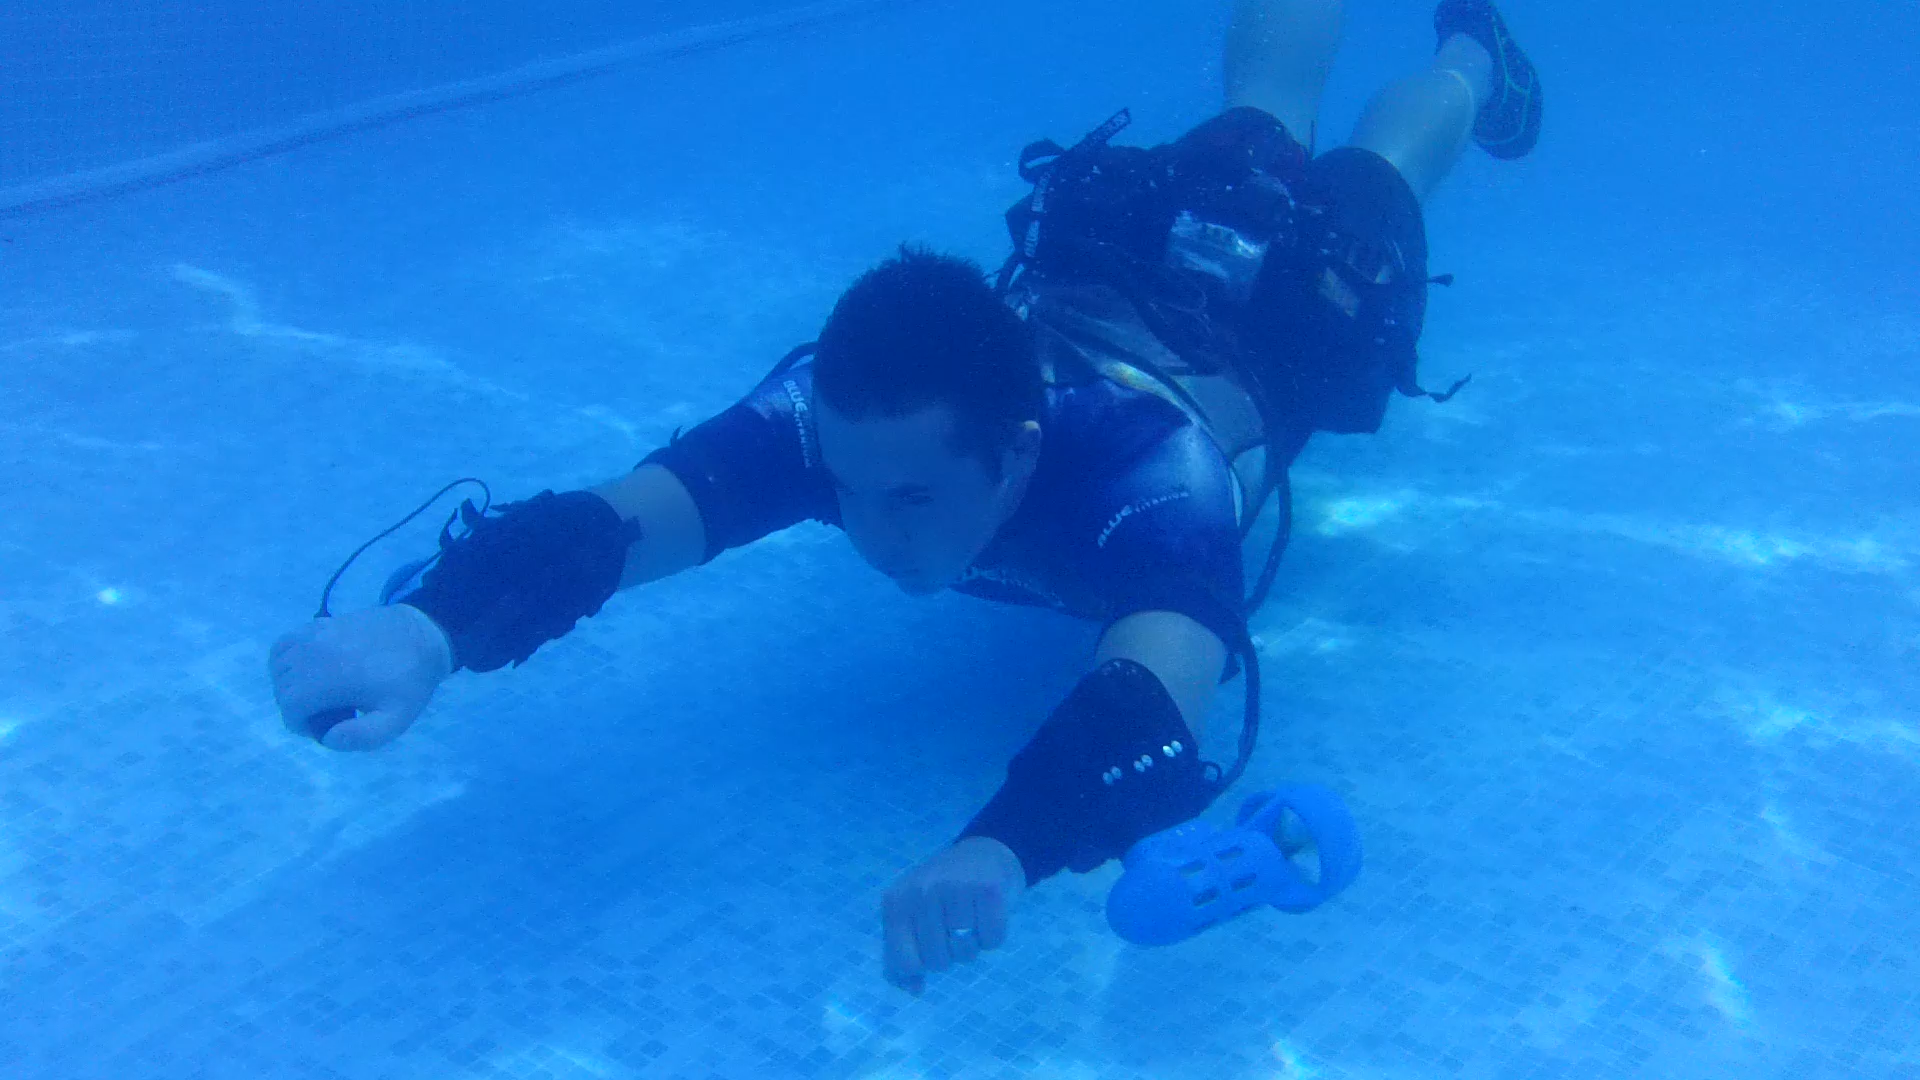 https://cdn0.tnwcdn.com/wp-content/blogs.dir/1/files/2013/12/Underwater-Action-x2-Underwater-Jet-Pack-System-1.png